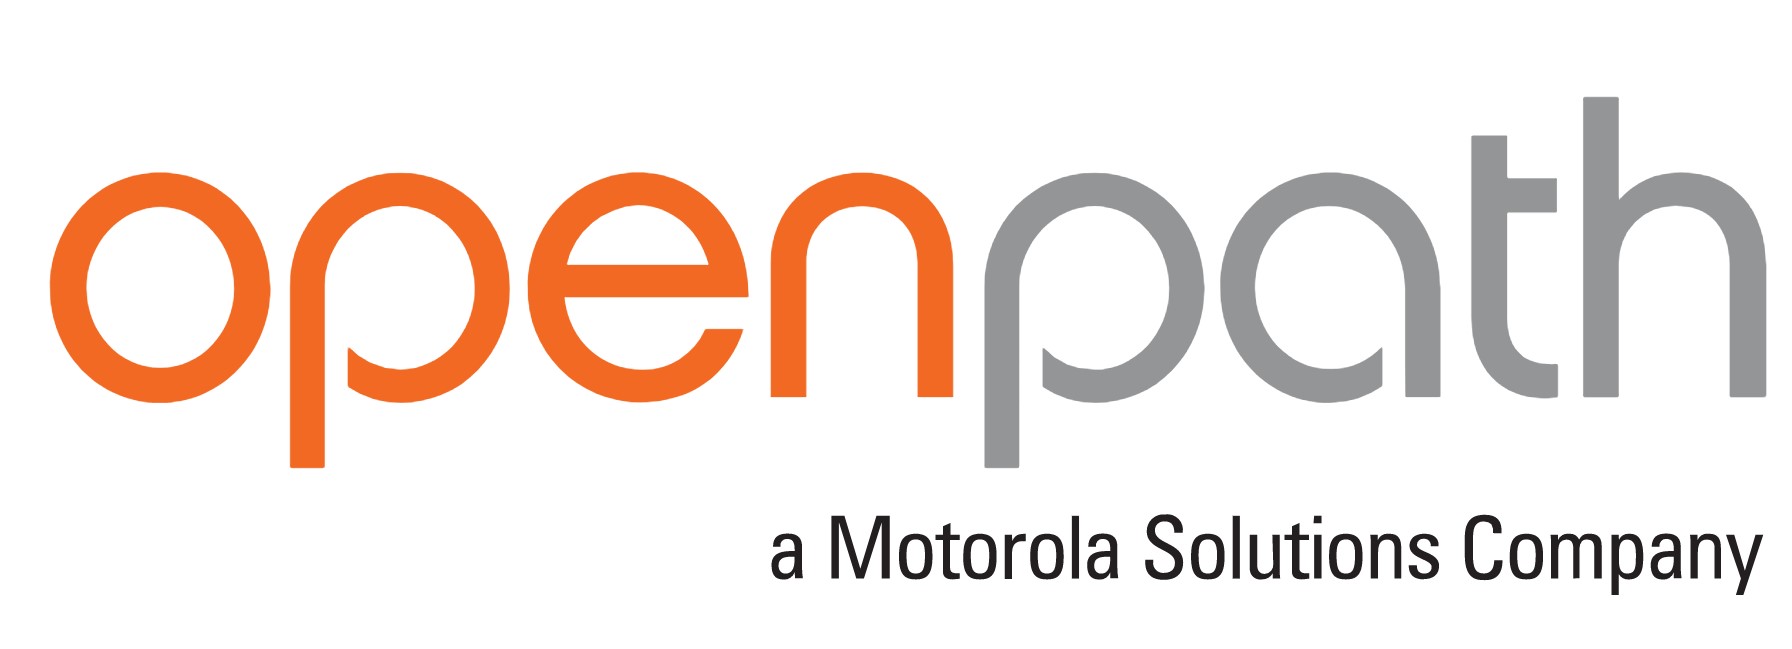 openpath logo